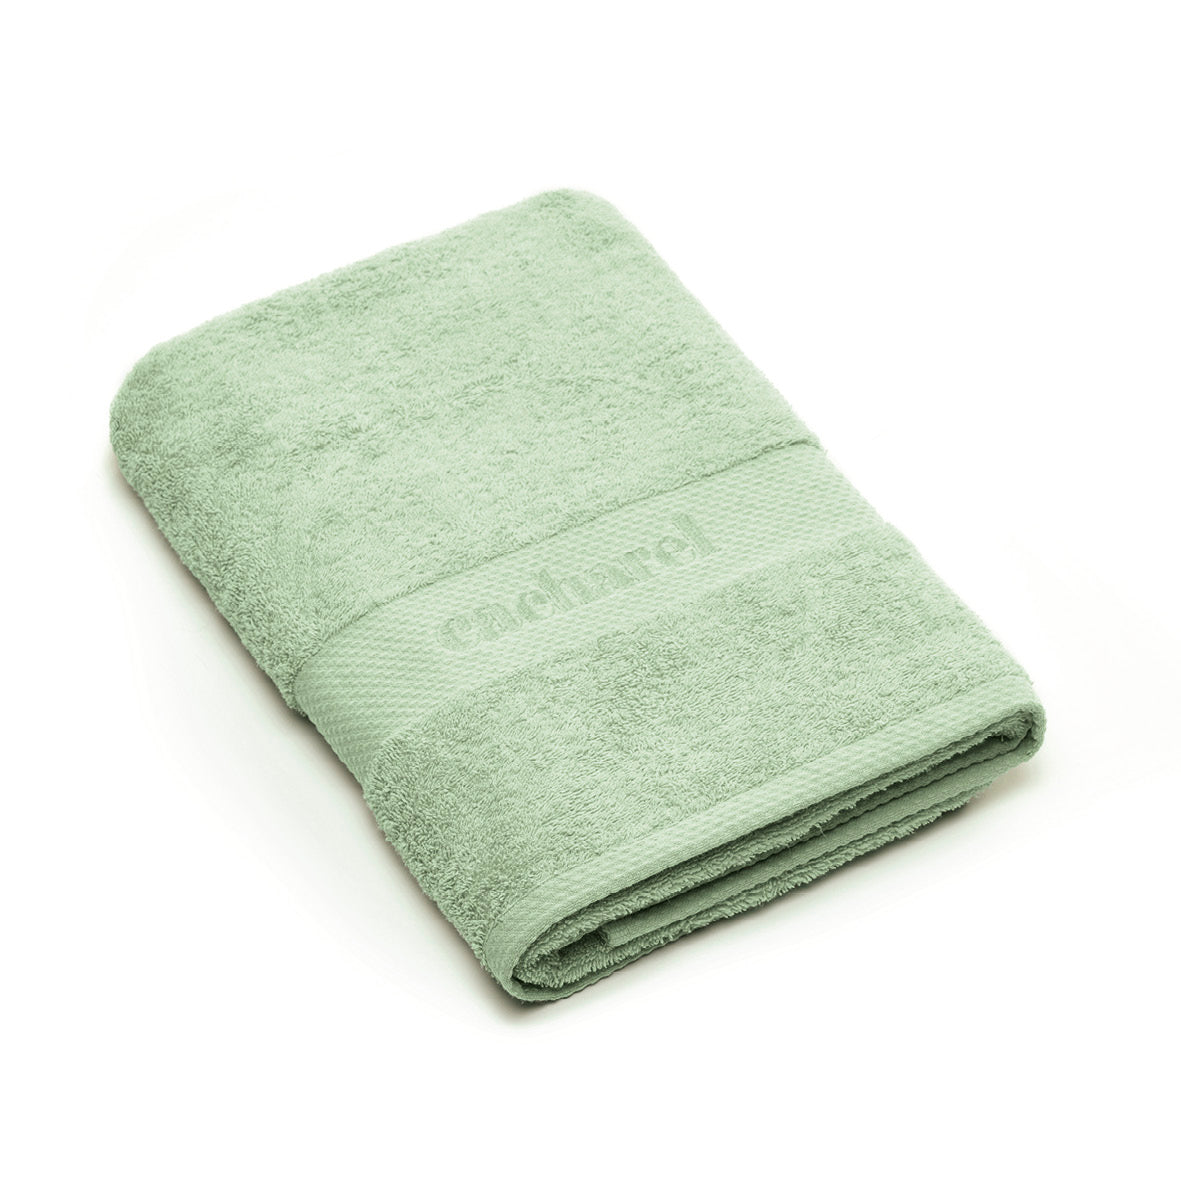 Maxi bath towel - 100 x 150 cm Meadow green